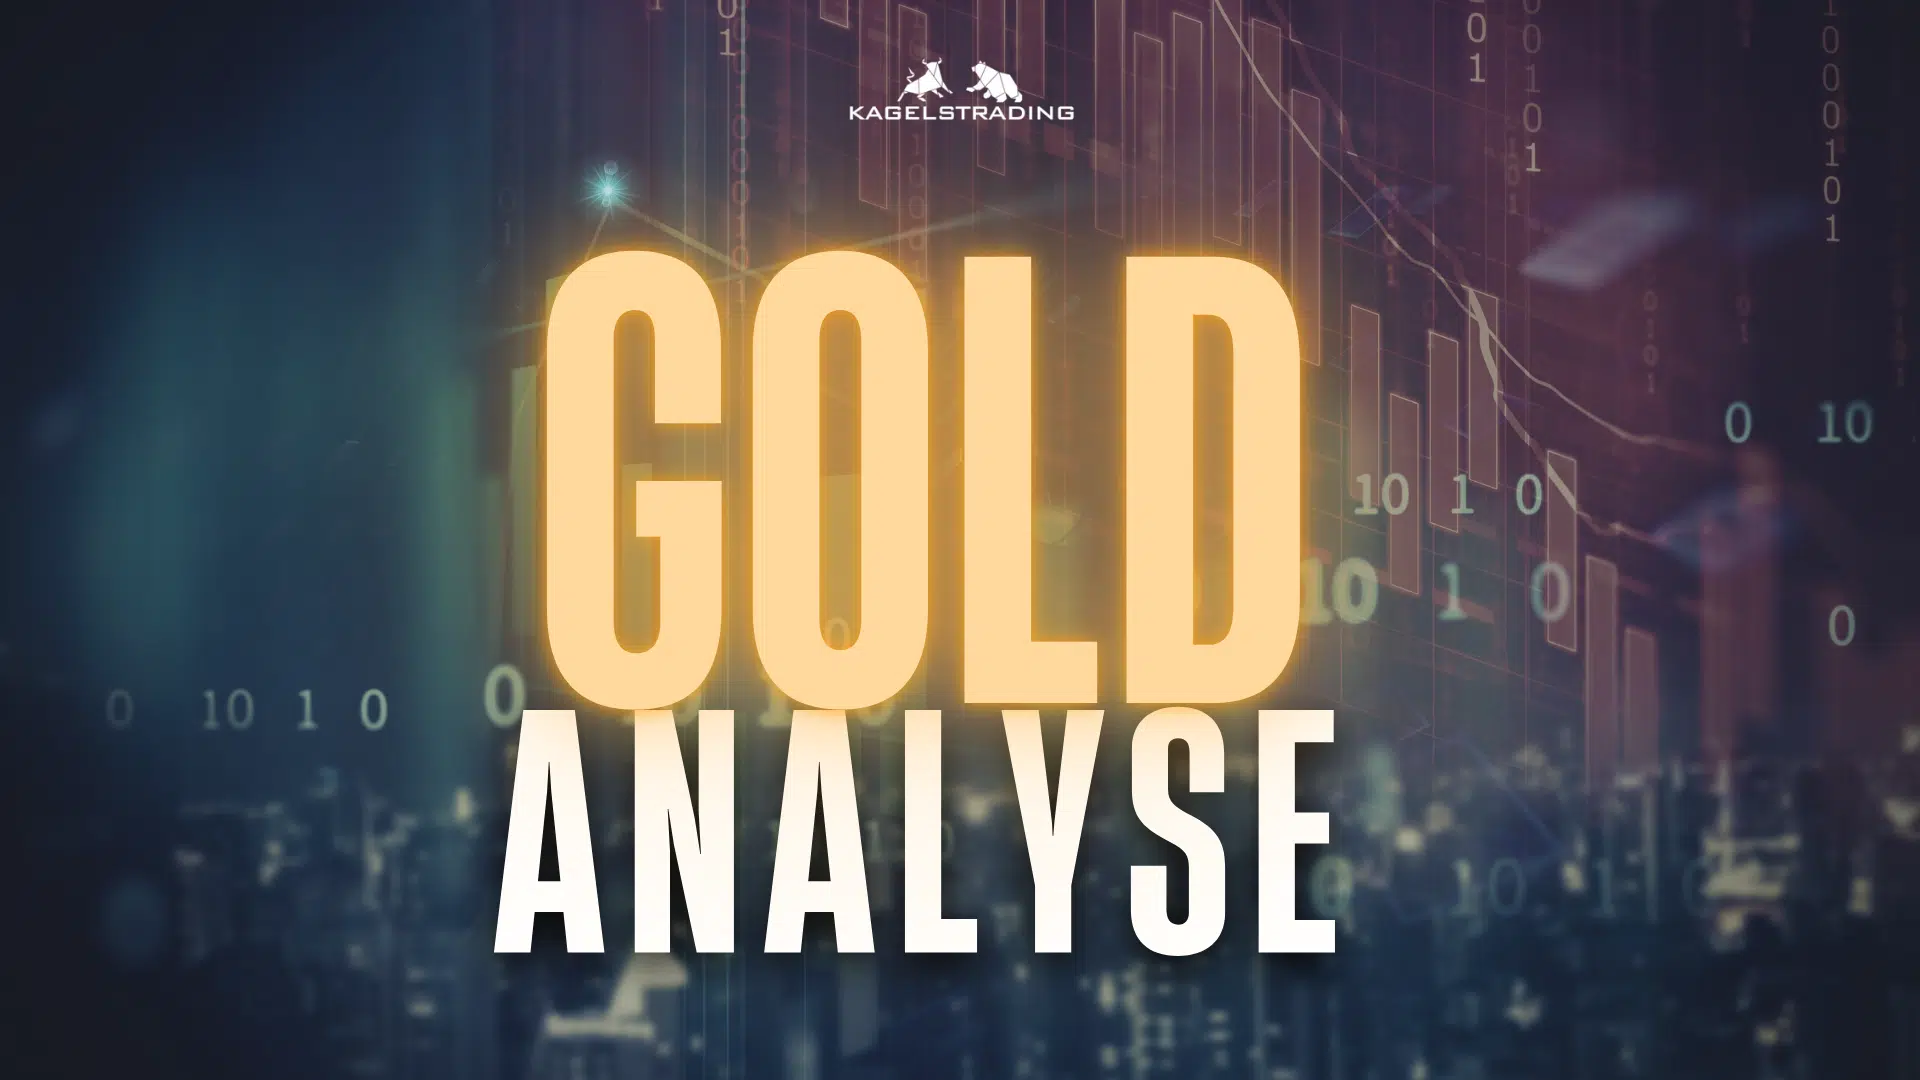 Goldpreis Analyse im Video